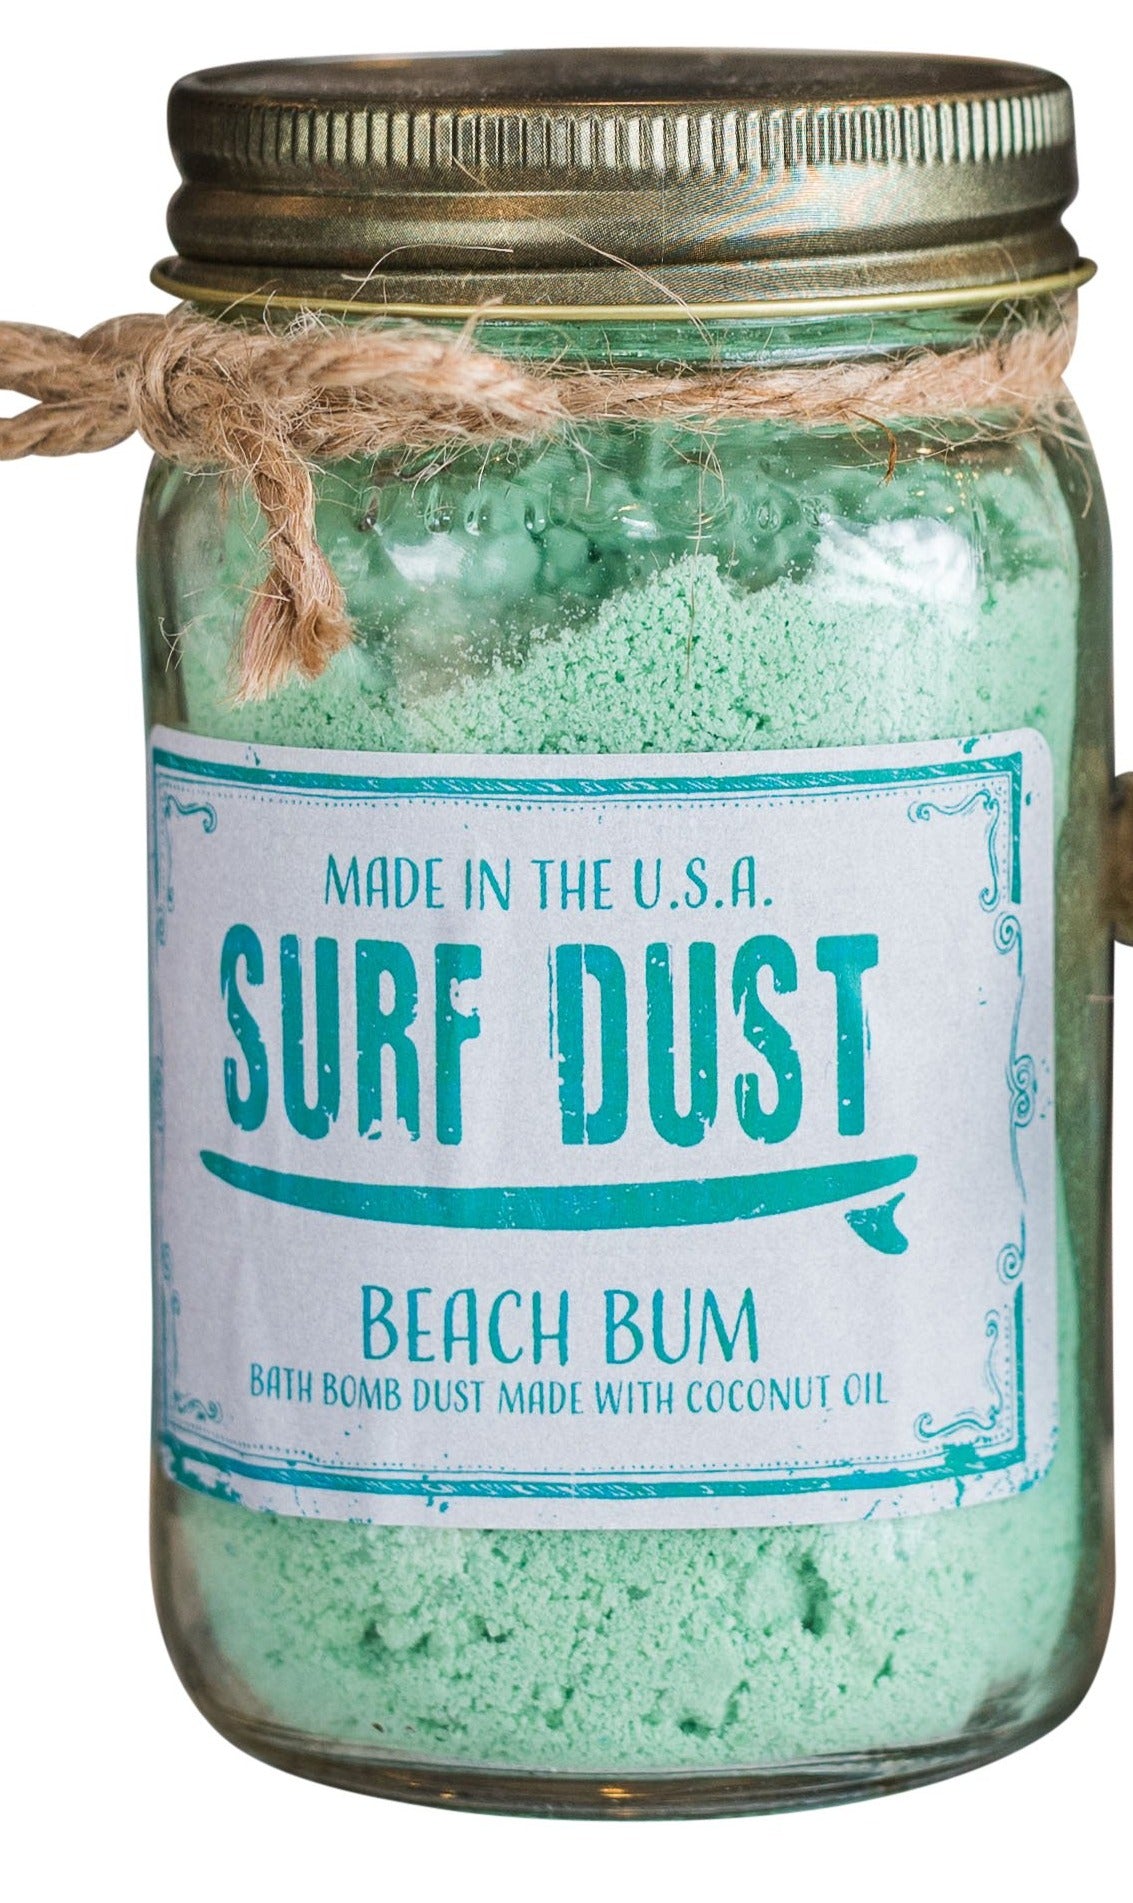 SIDEWALK SALE 24 - Beach Bum Large Surf Dust